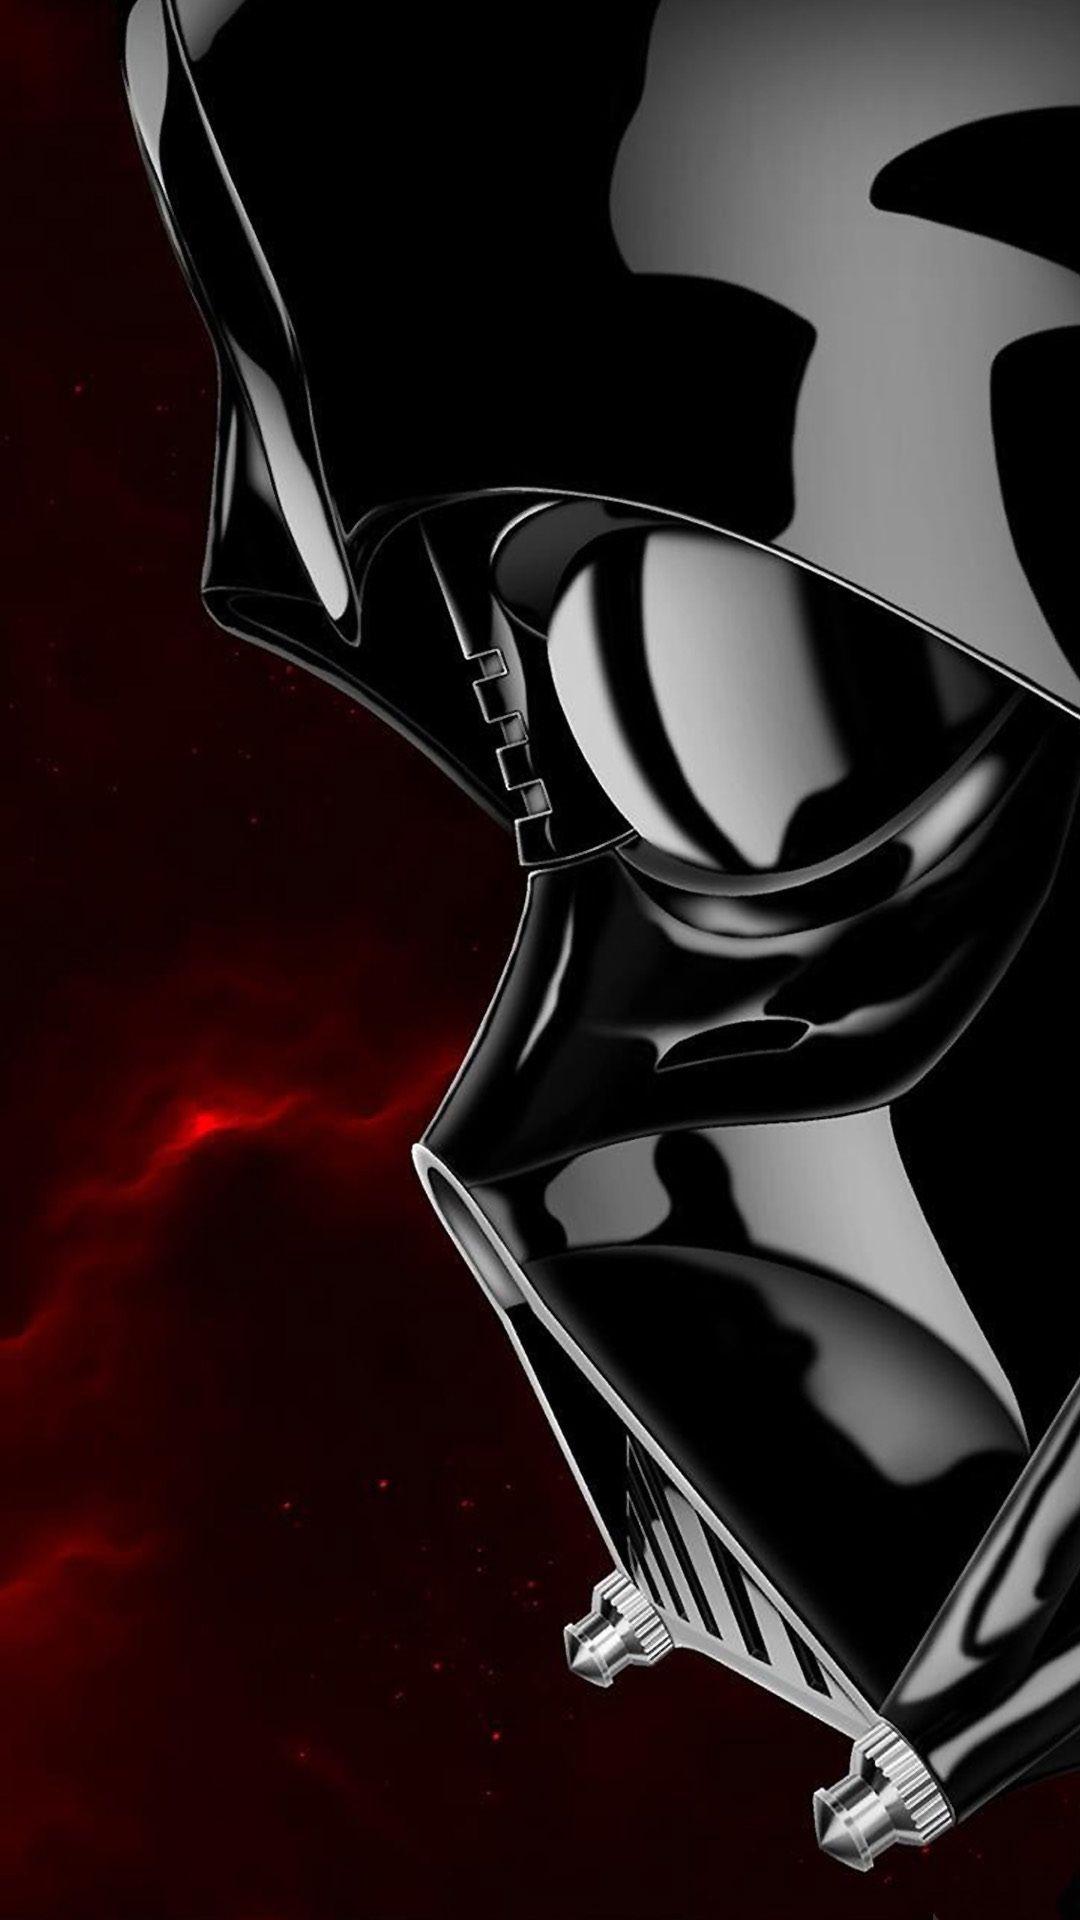 Darth Vader Star Wars Illustration iPhone 6 Plus HD Wallpaper HD